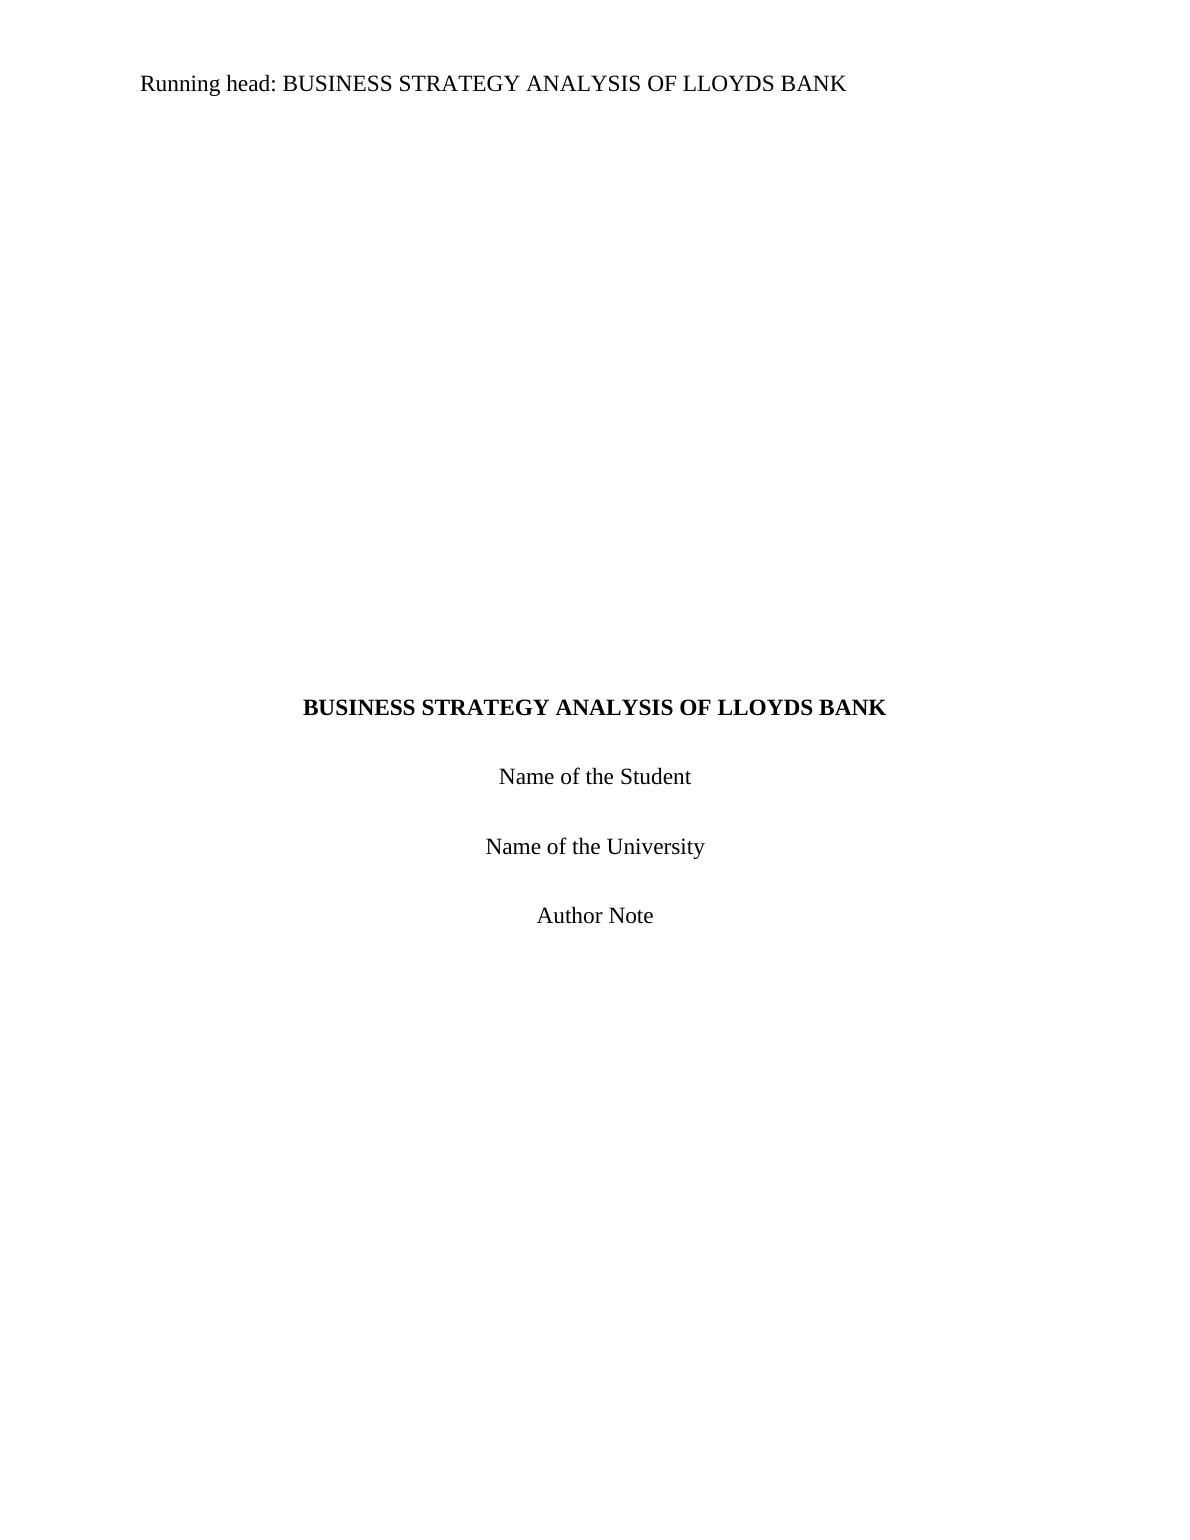 Business Strategy Analysis of Lloyds Bank_1